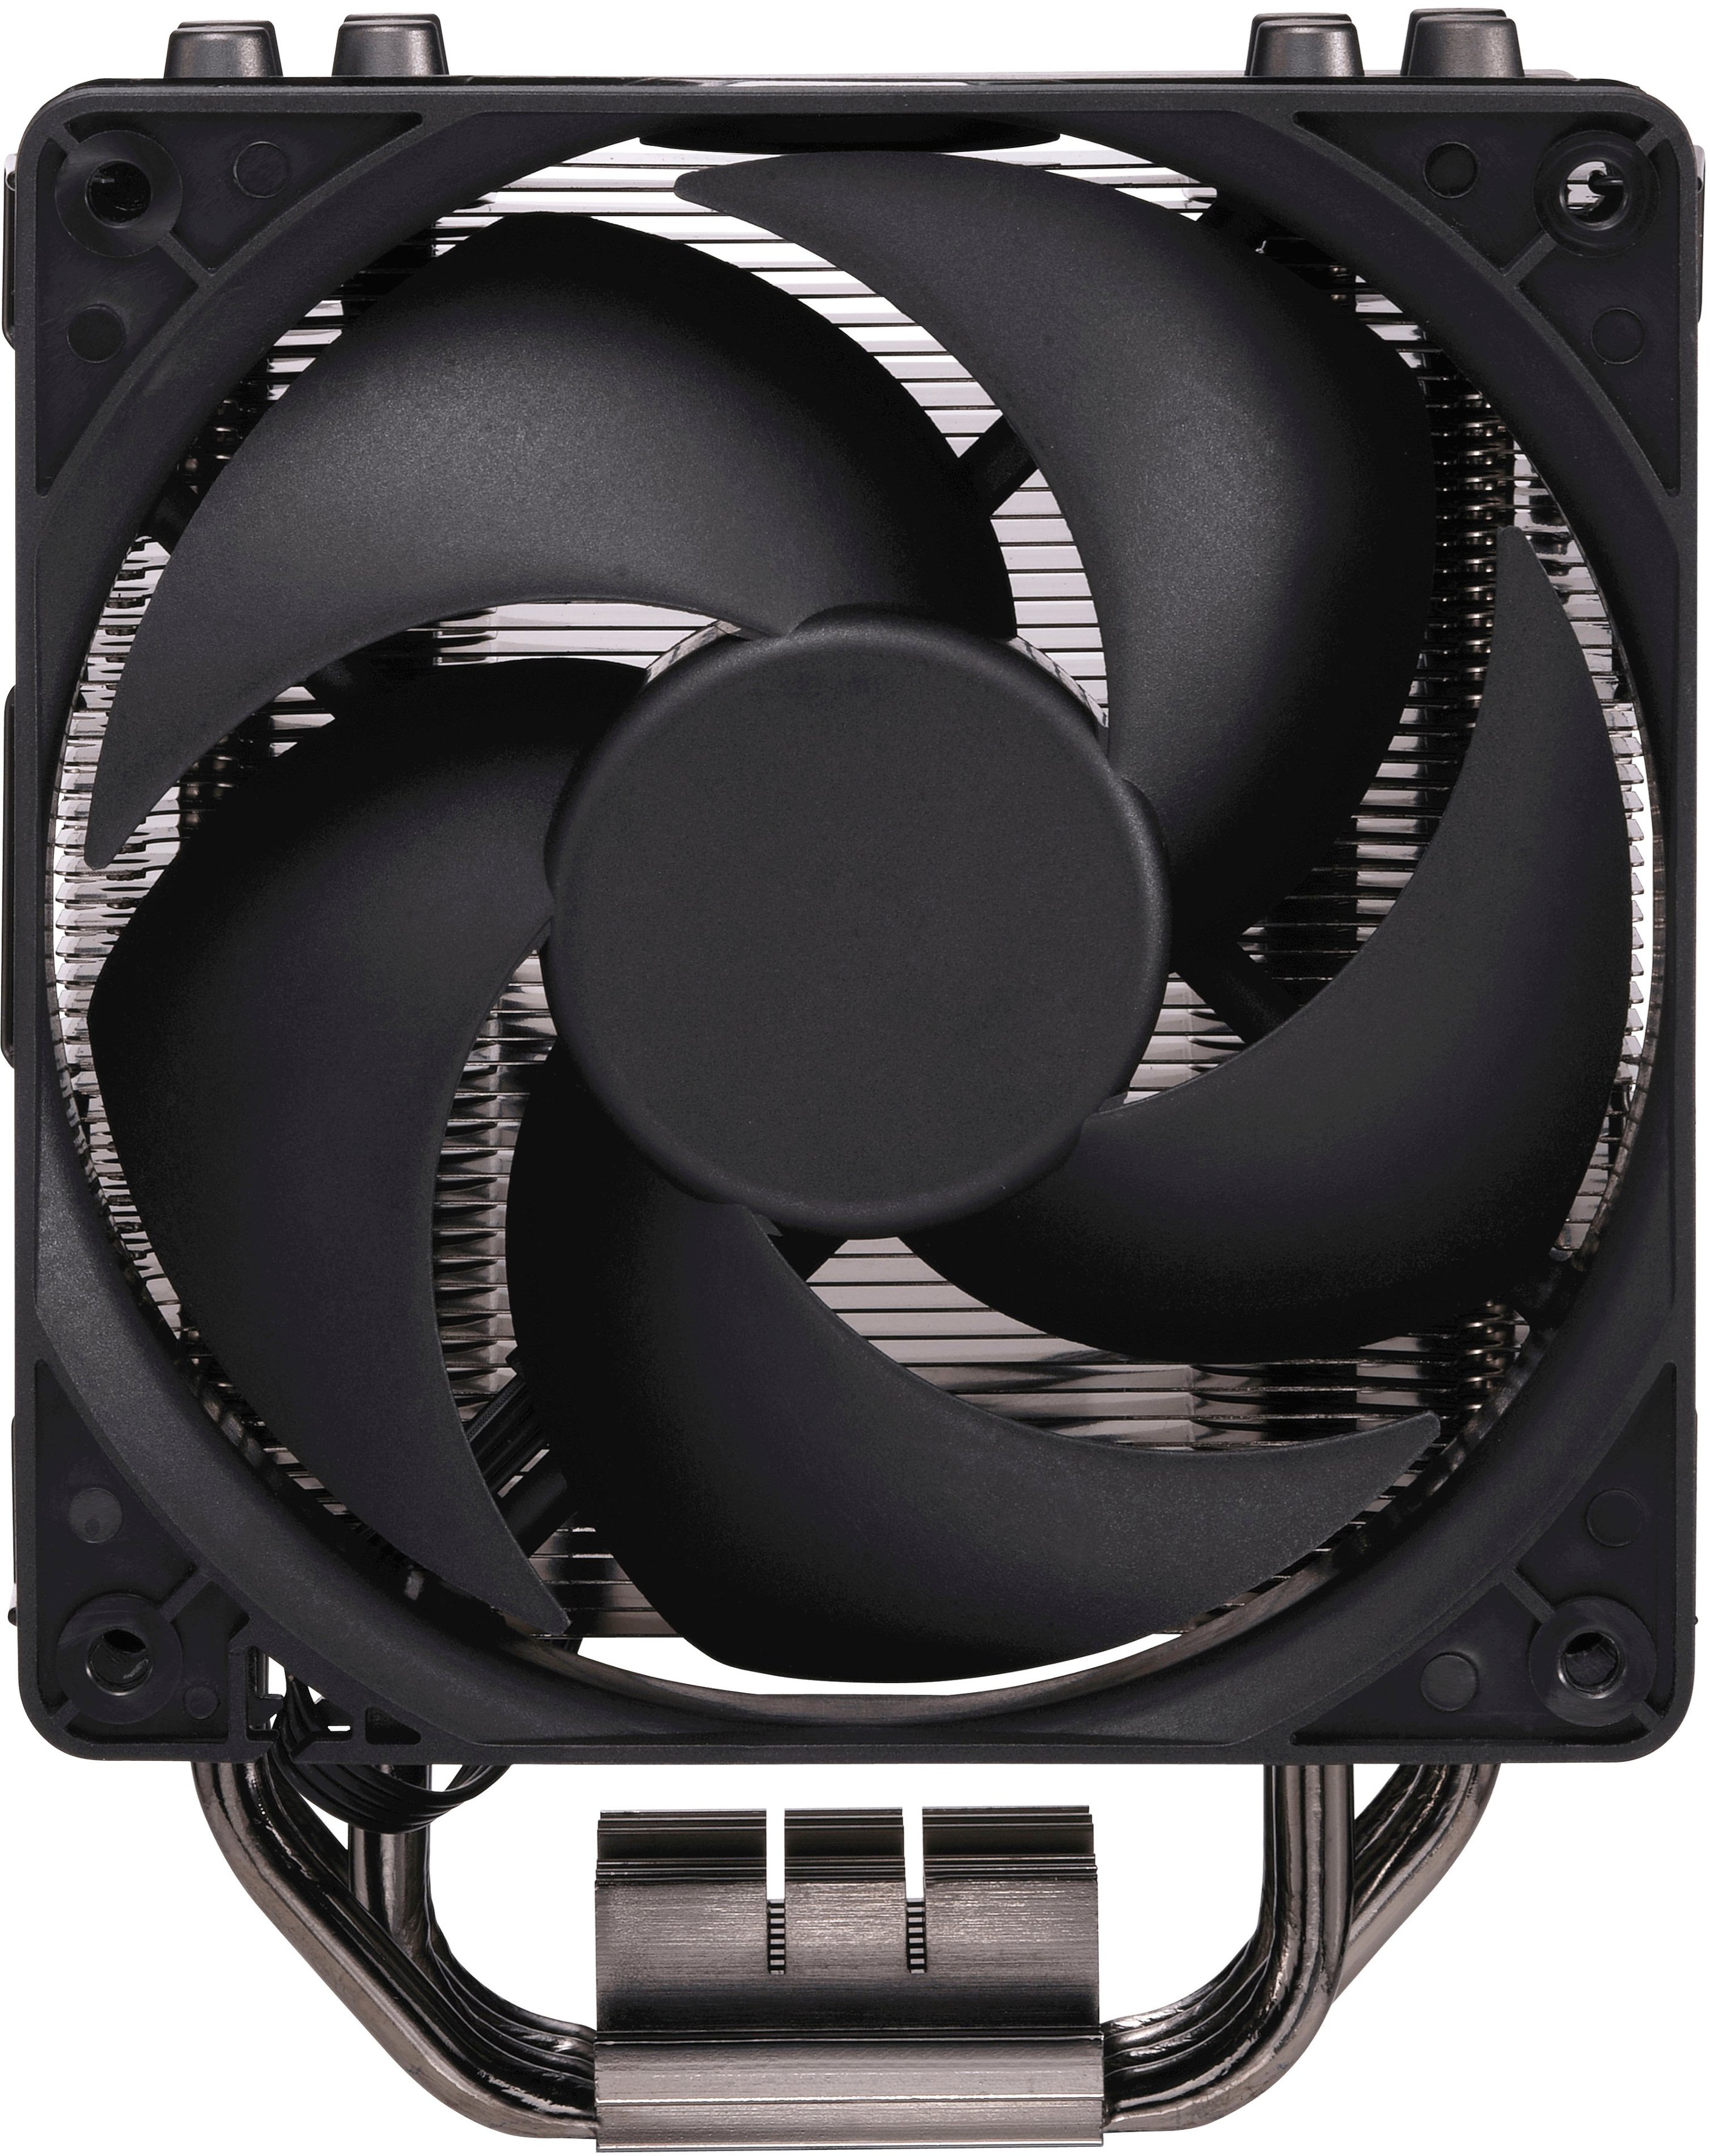 Hyper 212 Halo Black CPU Air Cooler